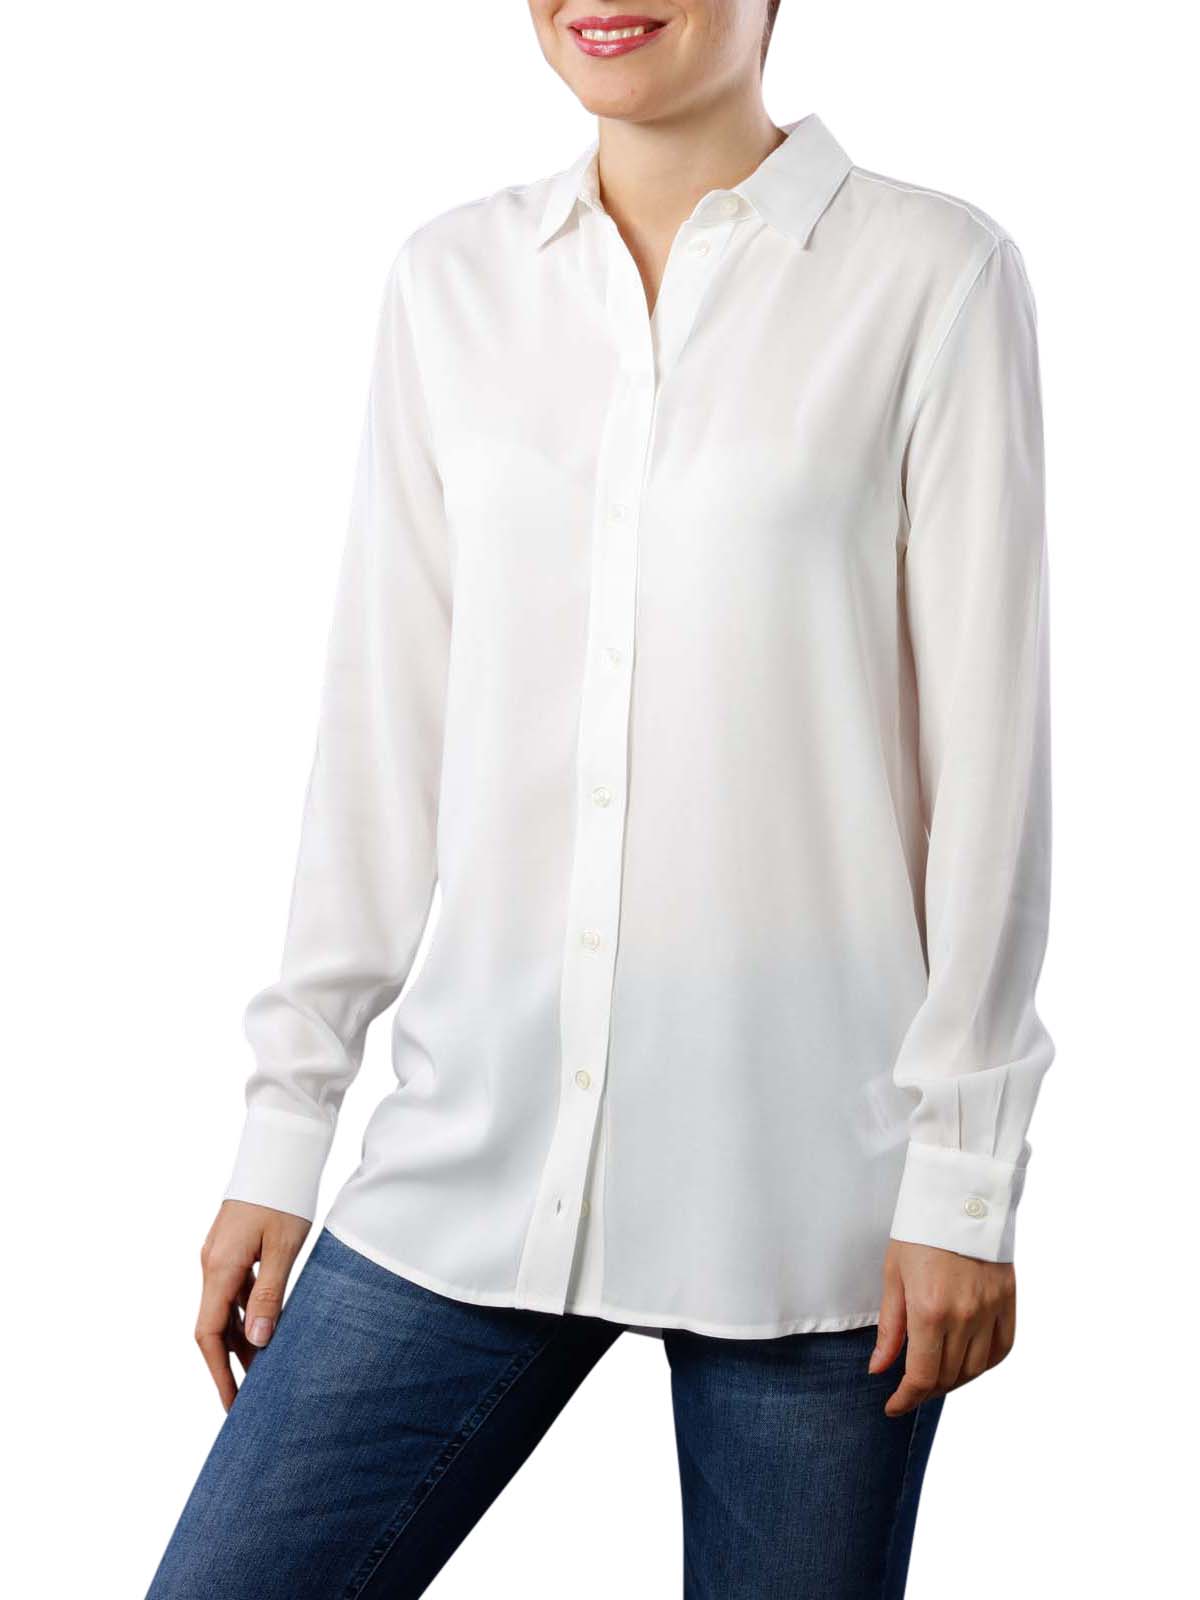 white polo shirt womens long sleeve